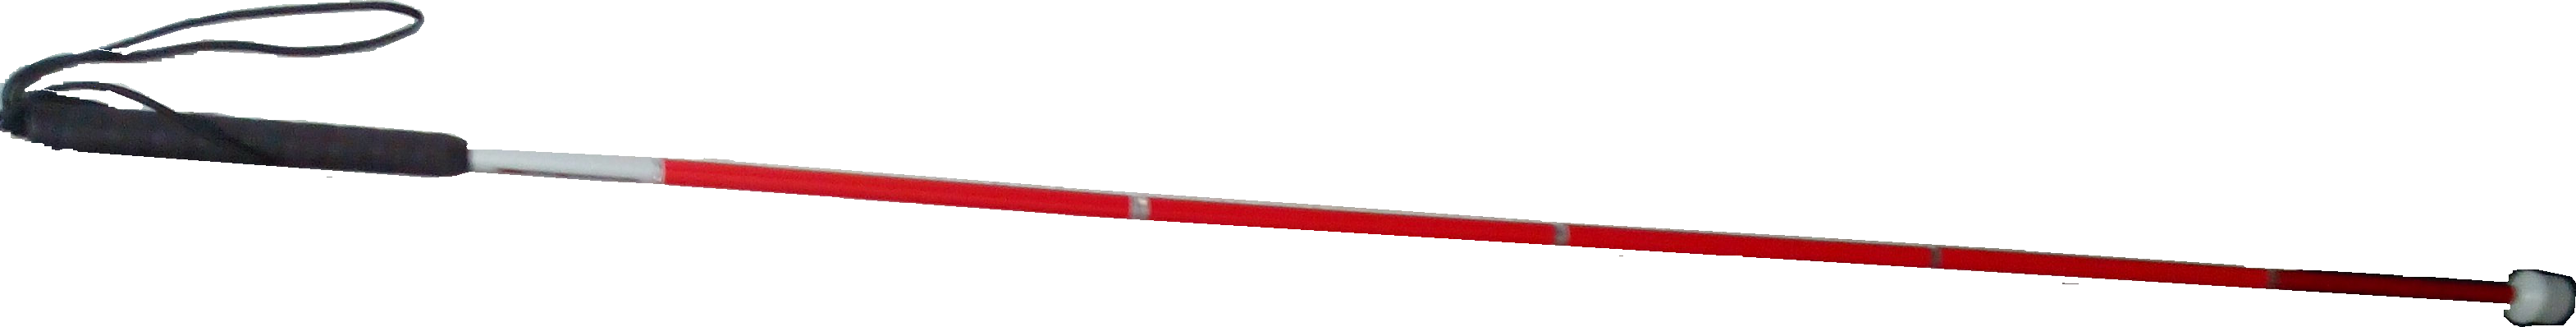 Suchstock, Faltstock 5-teilig Aluminium, Kunststoffgriff, rot